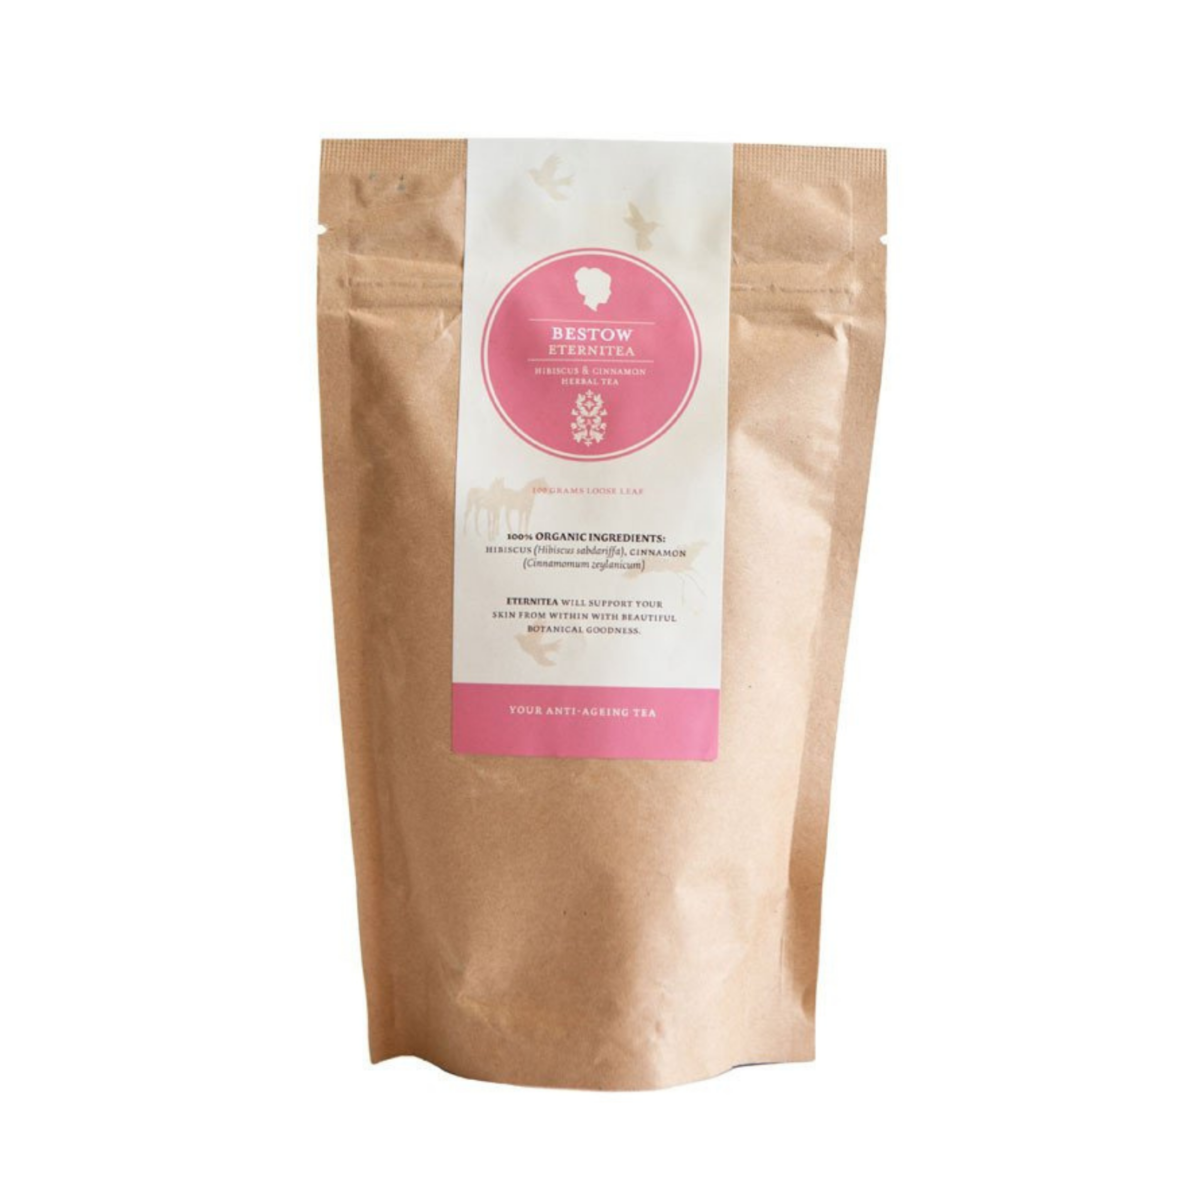 Bestow Organic tea refill - Eternitea 100g - Soho Skincare